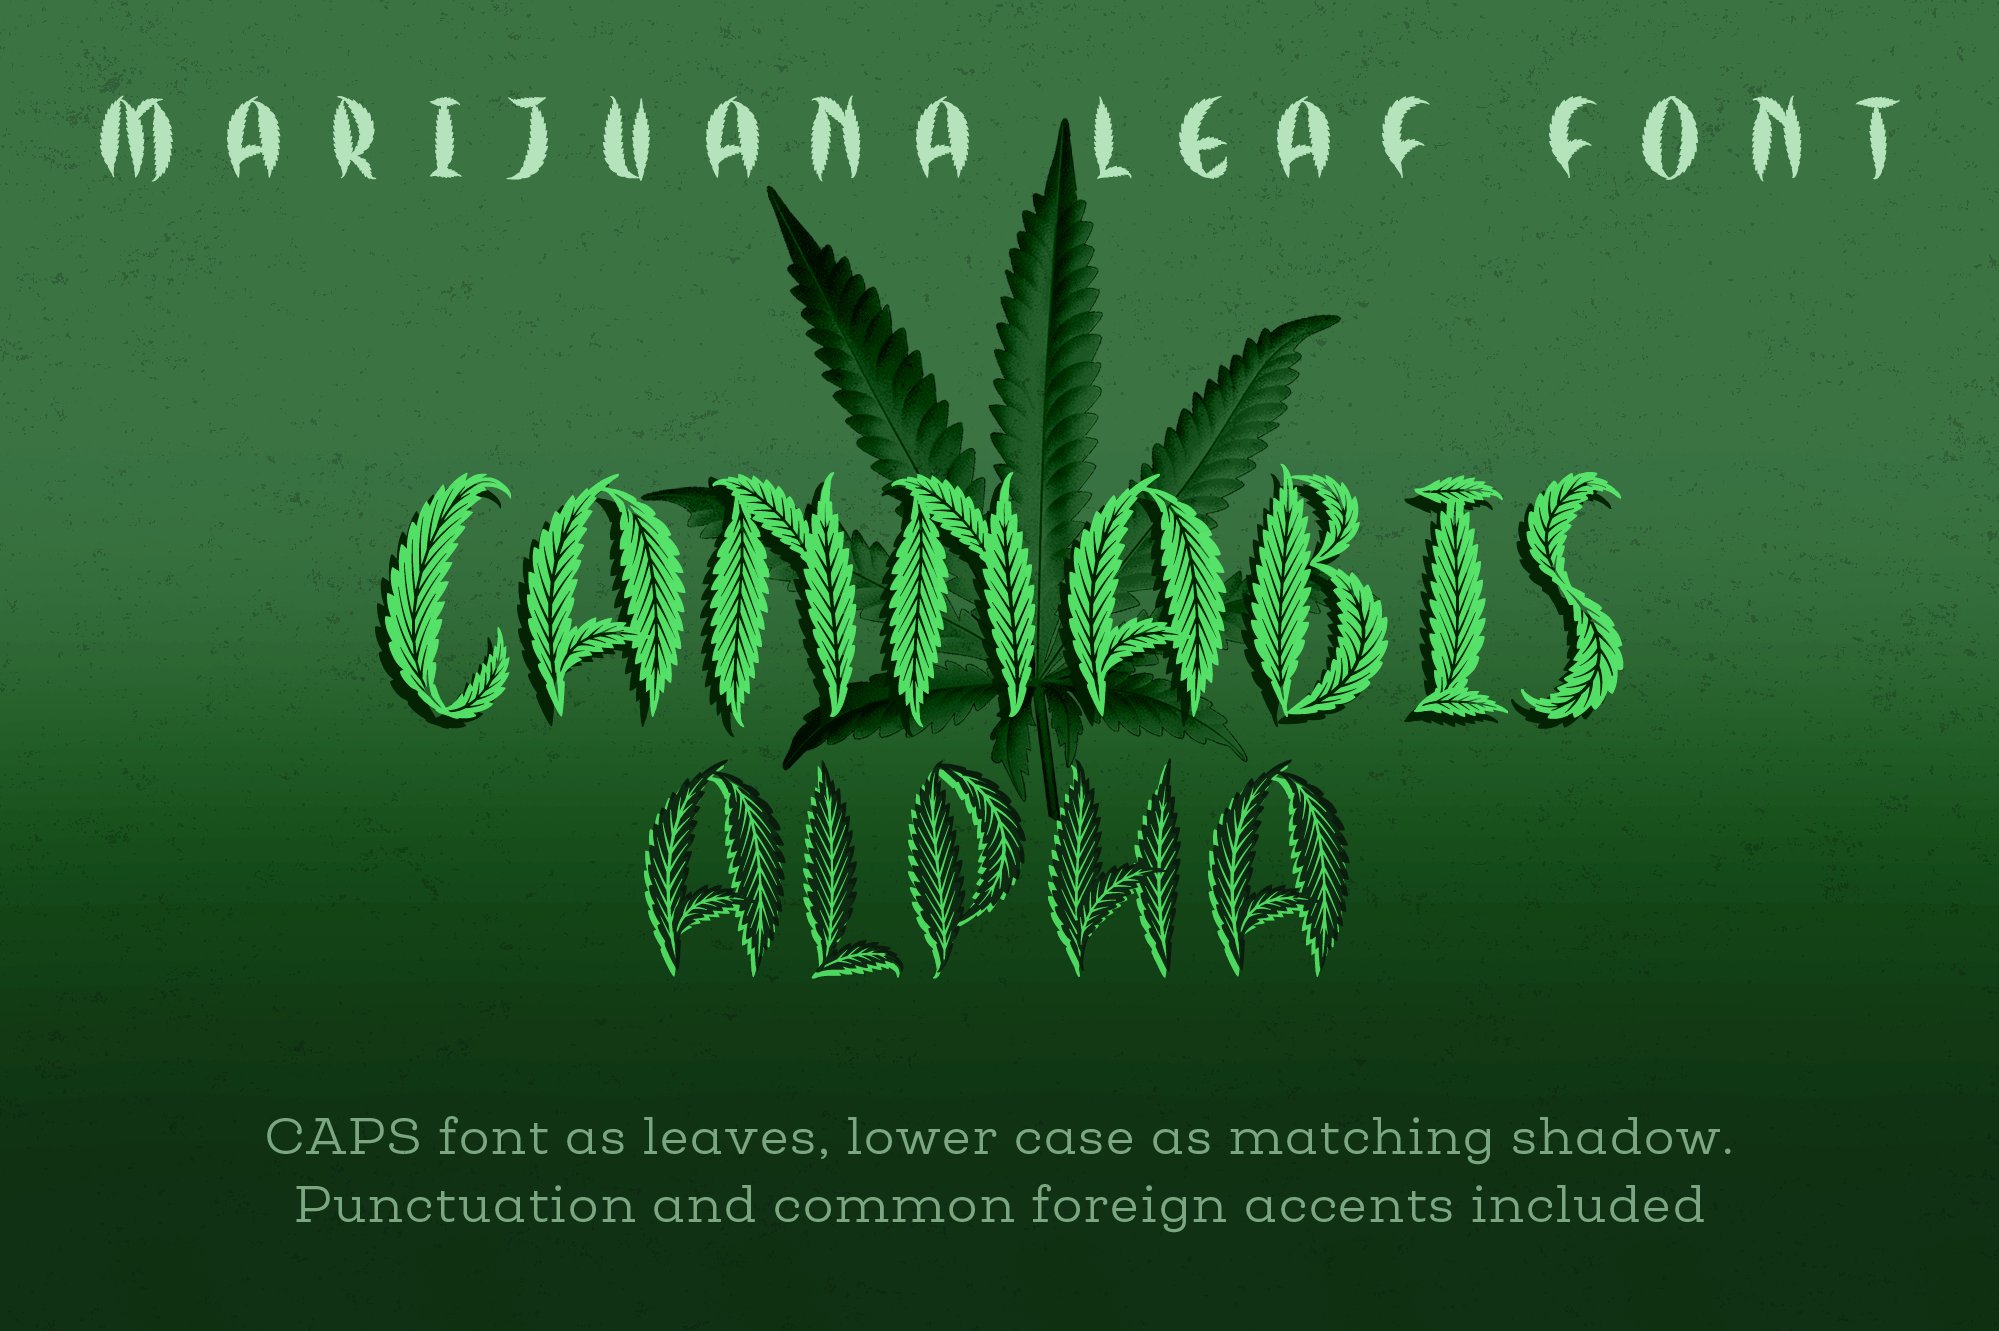 Cannabis Leaf Font - Hemp Leaf cover image.